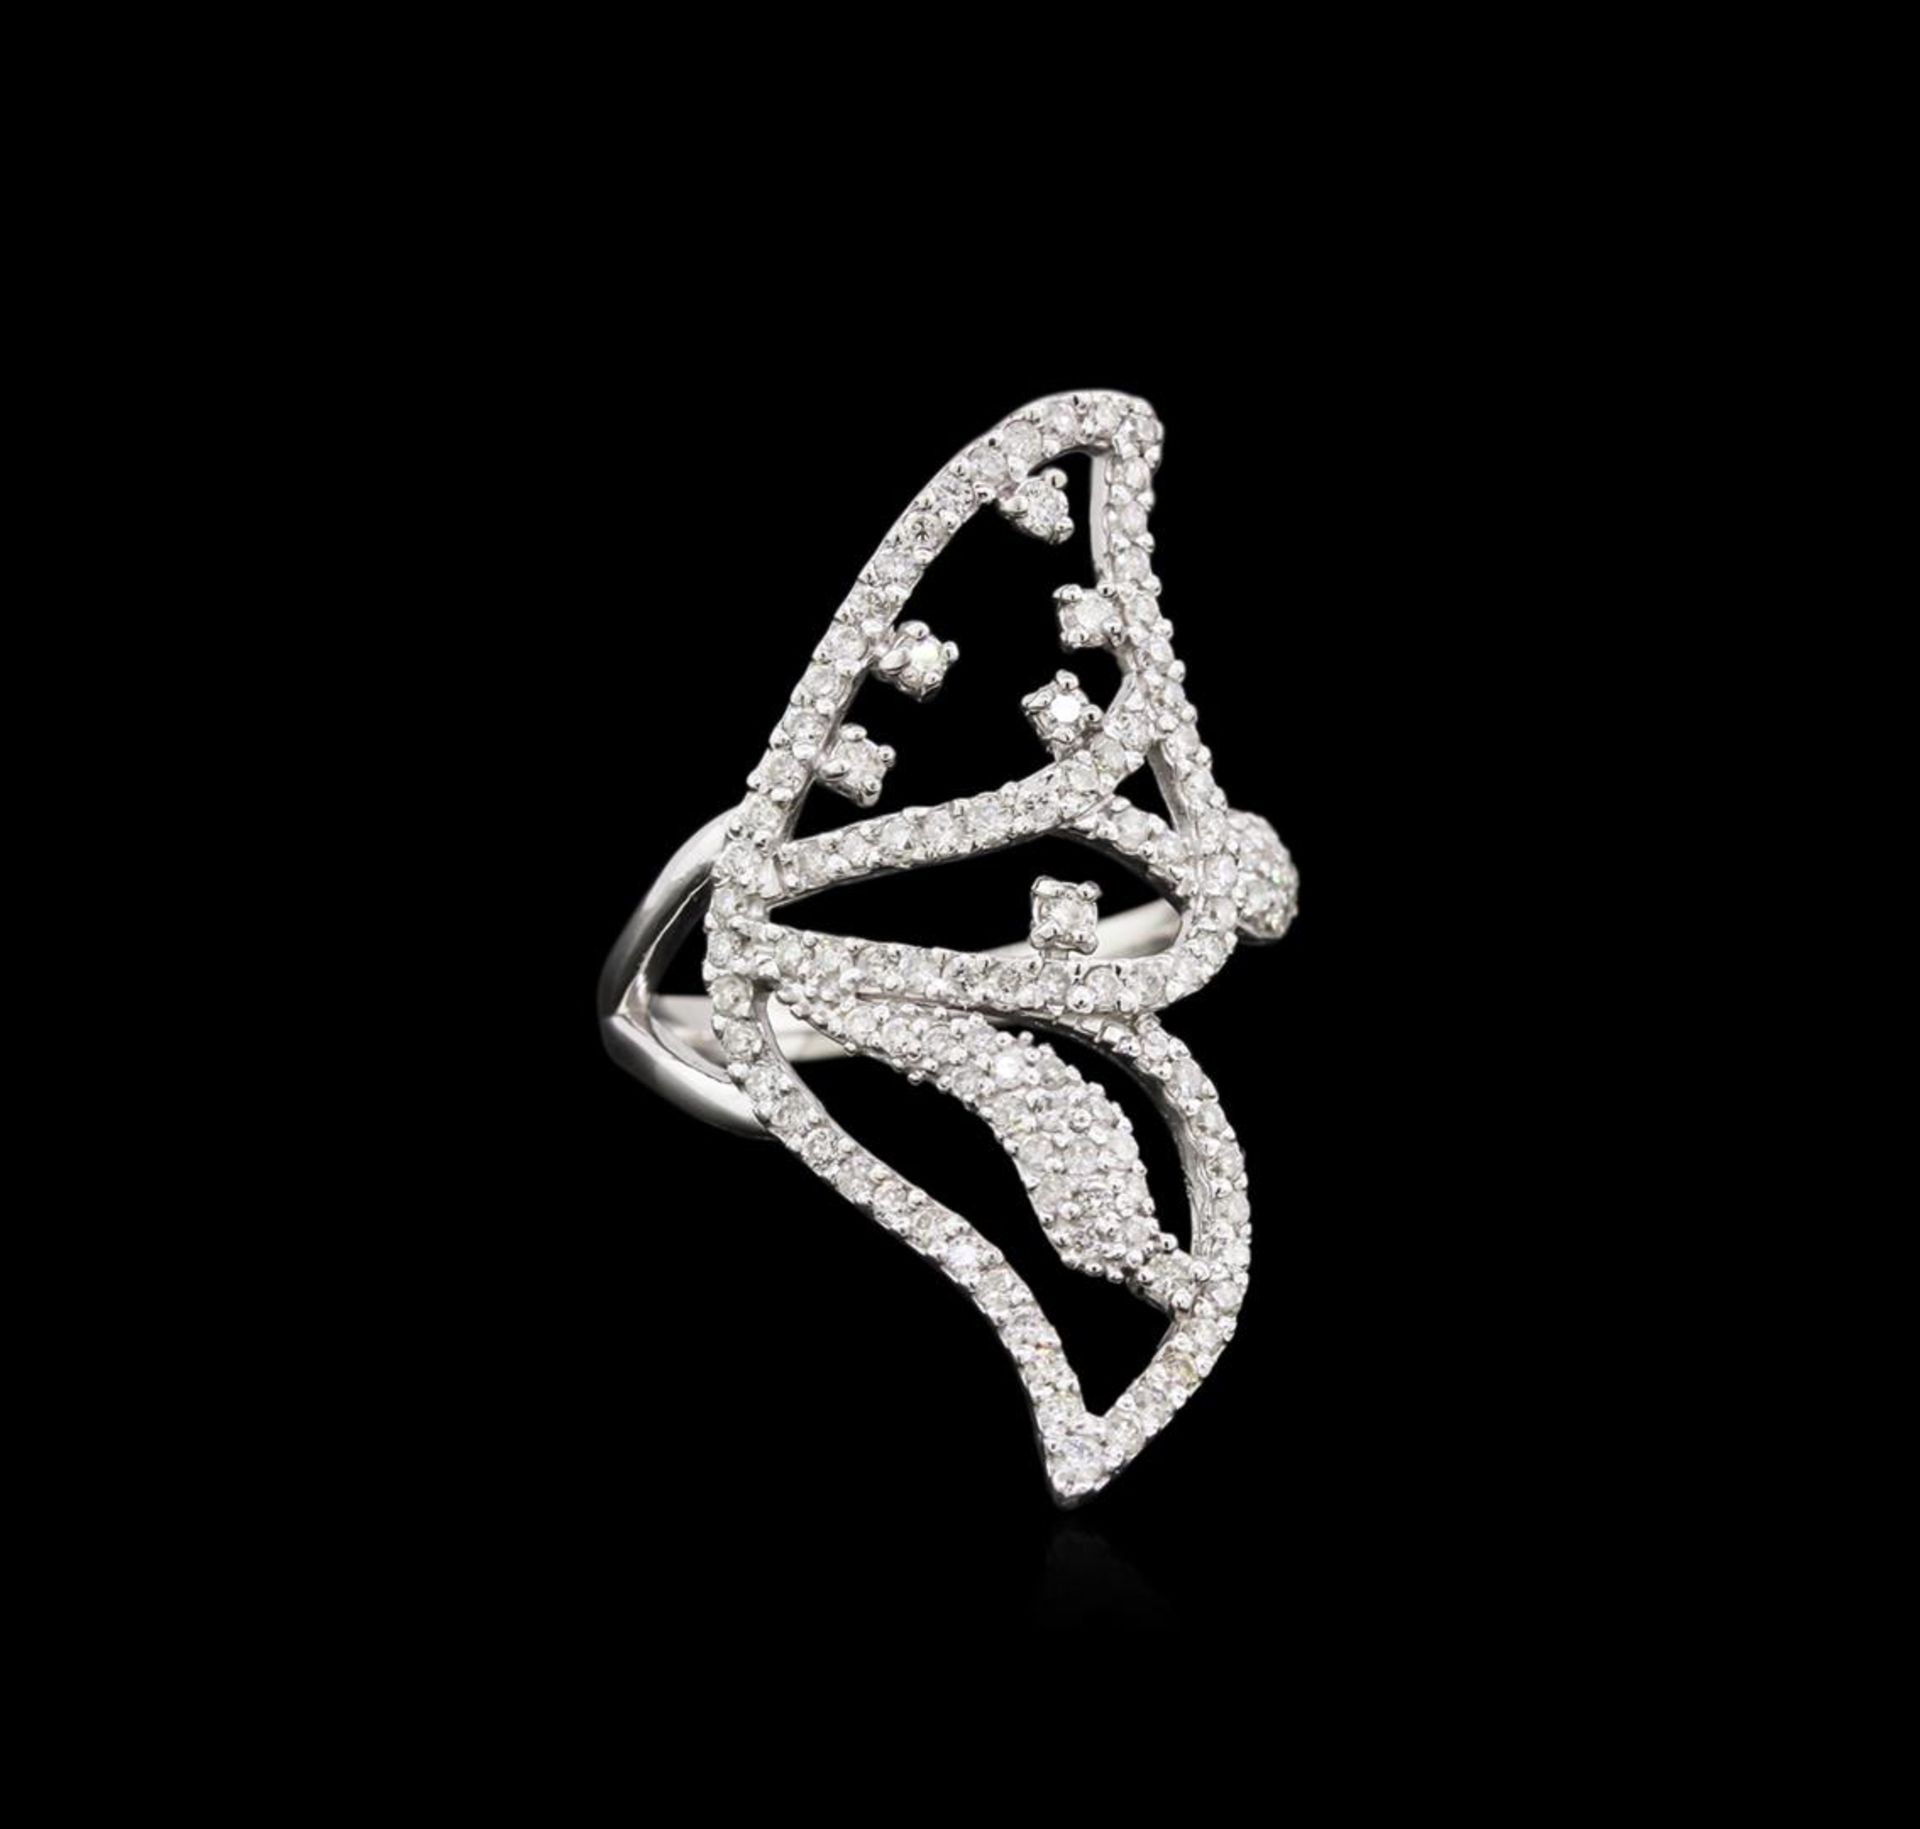 0.75 ctw Diamond Ring - 14KT White Gold - Image 2 of 3